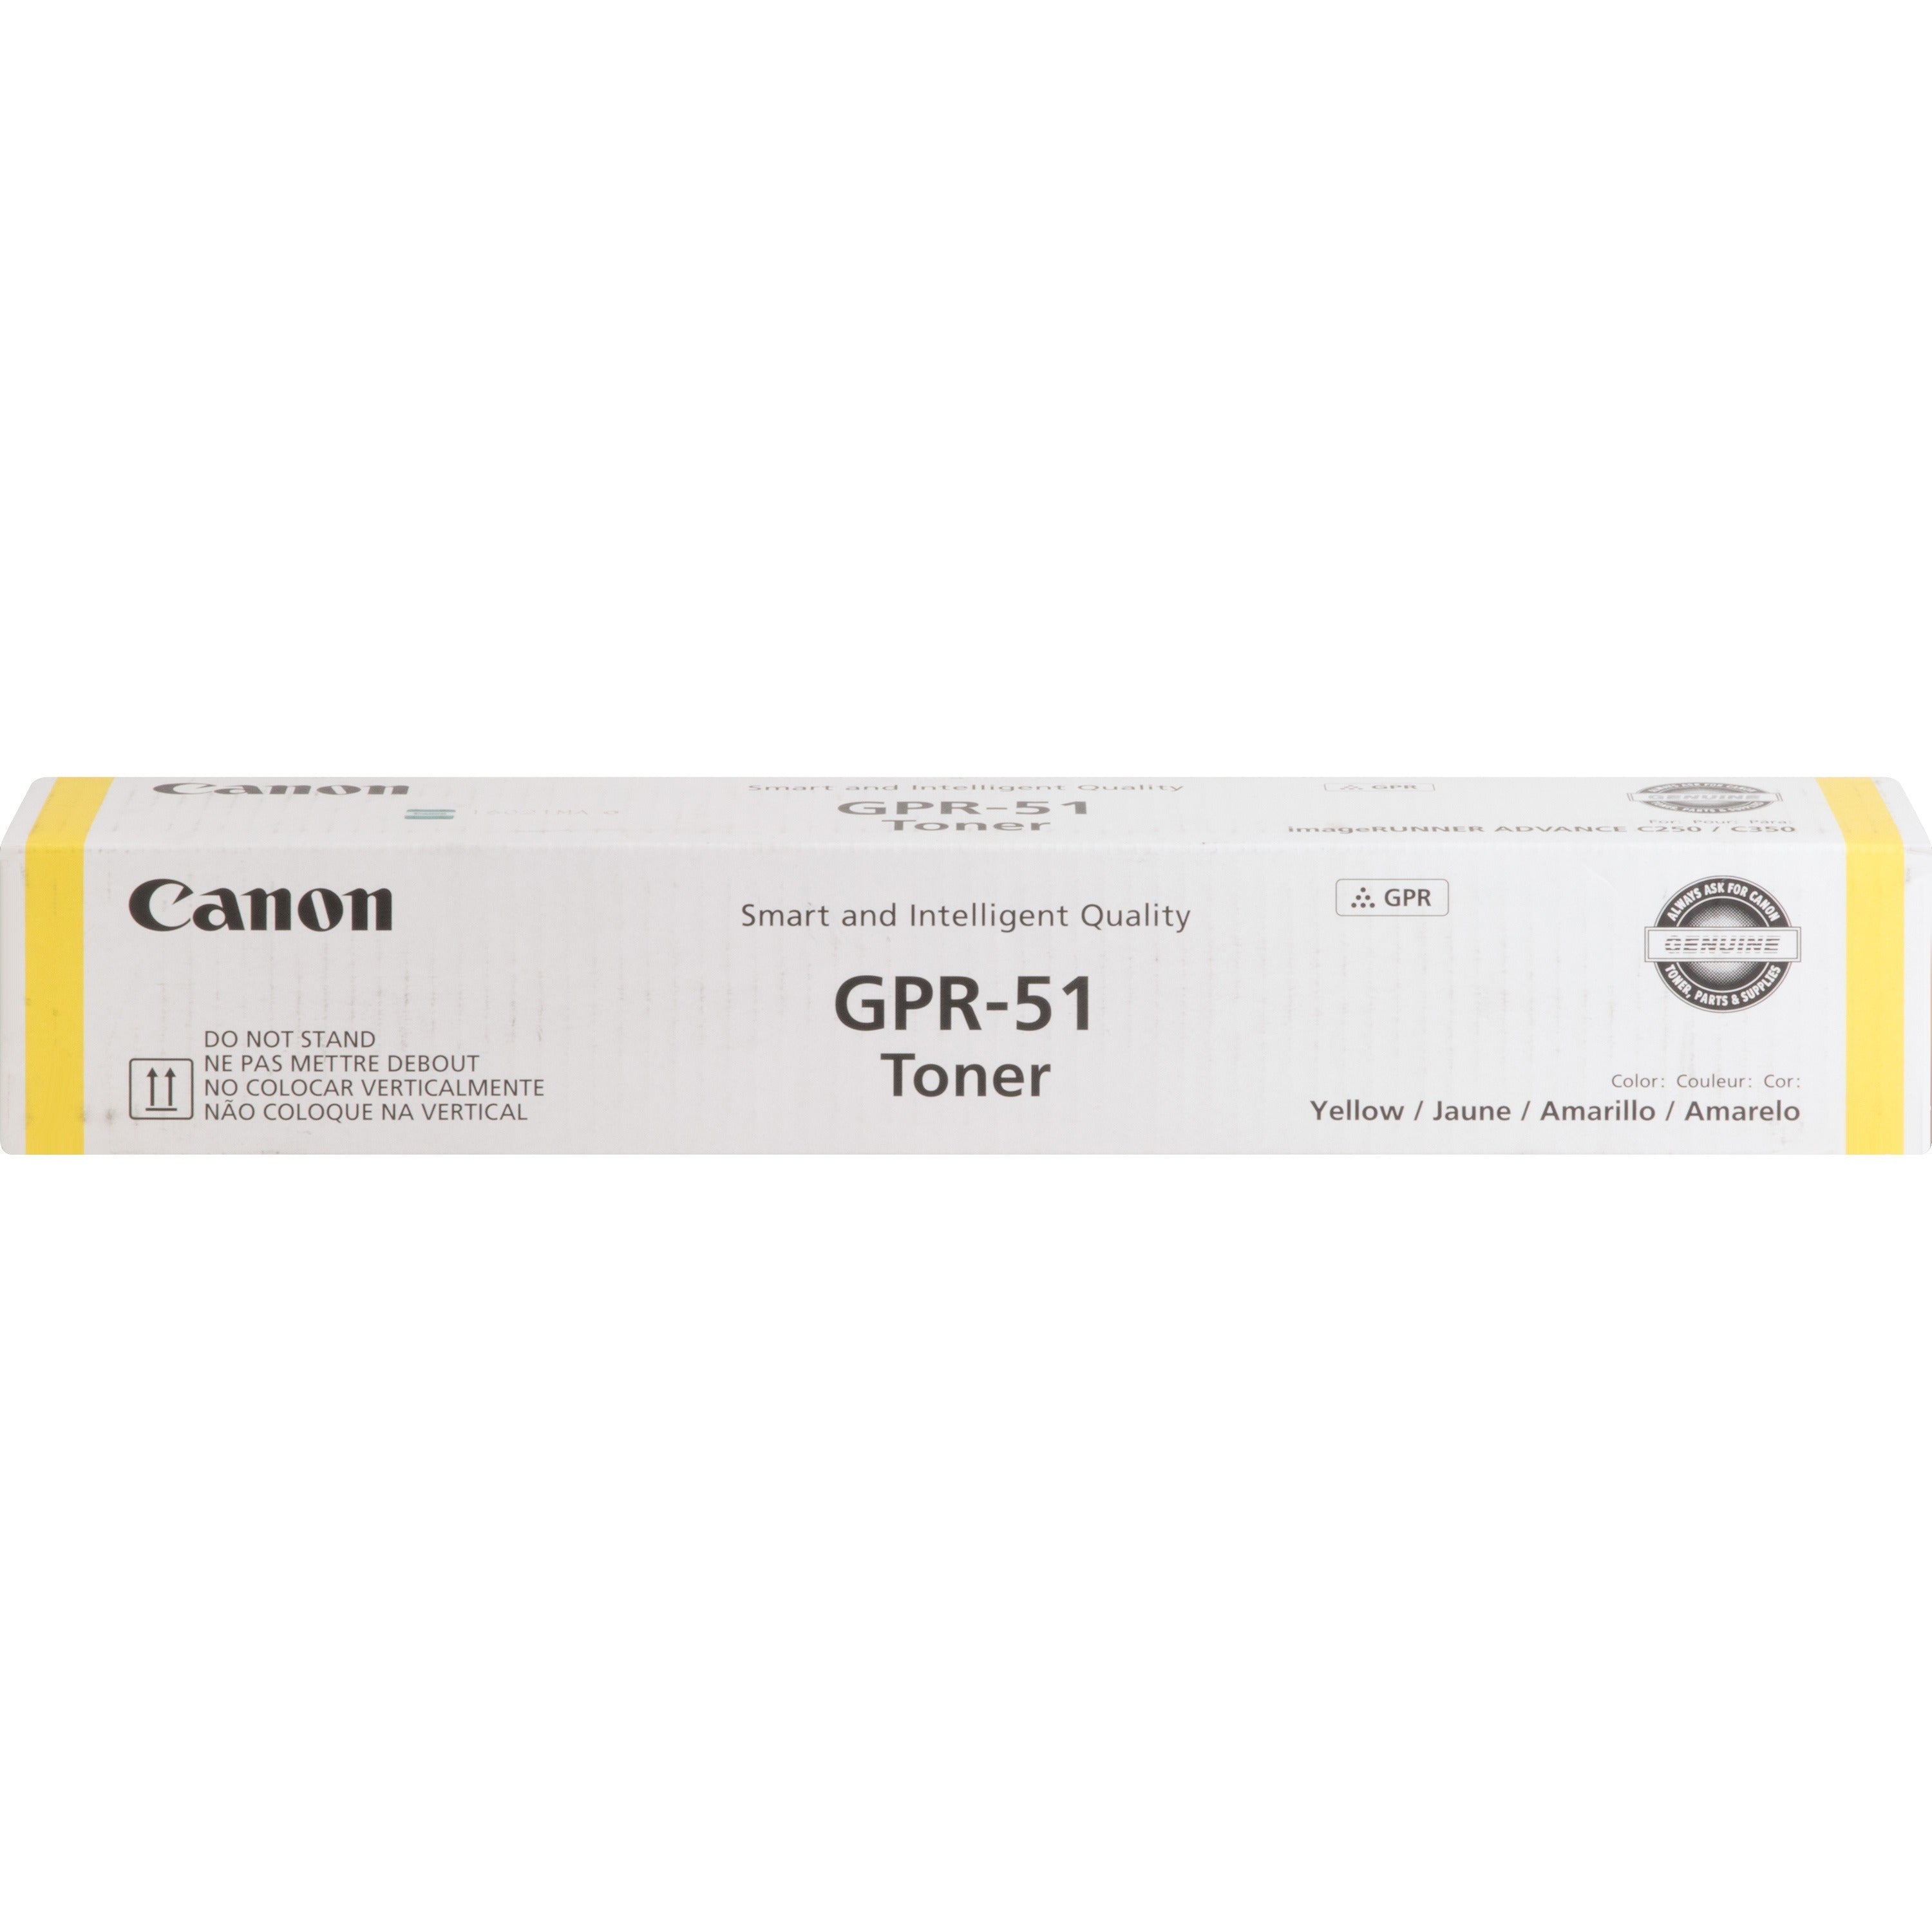 canon-gpr-51-original-laser-toner-cartridge-yellow-1-each-21500-pages_cnmgpr51y - 1